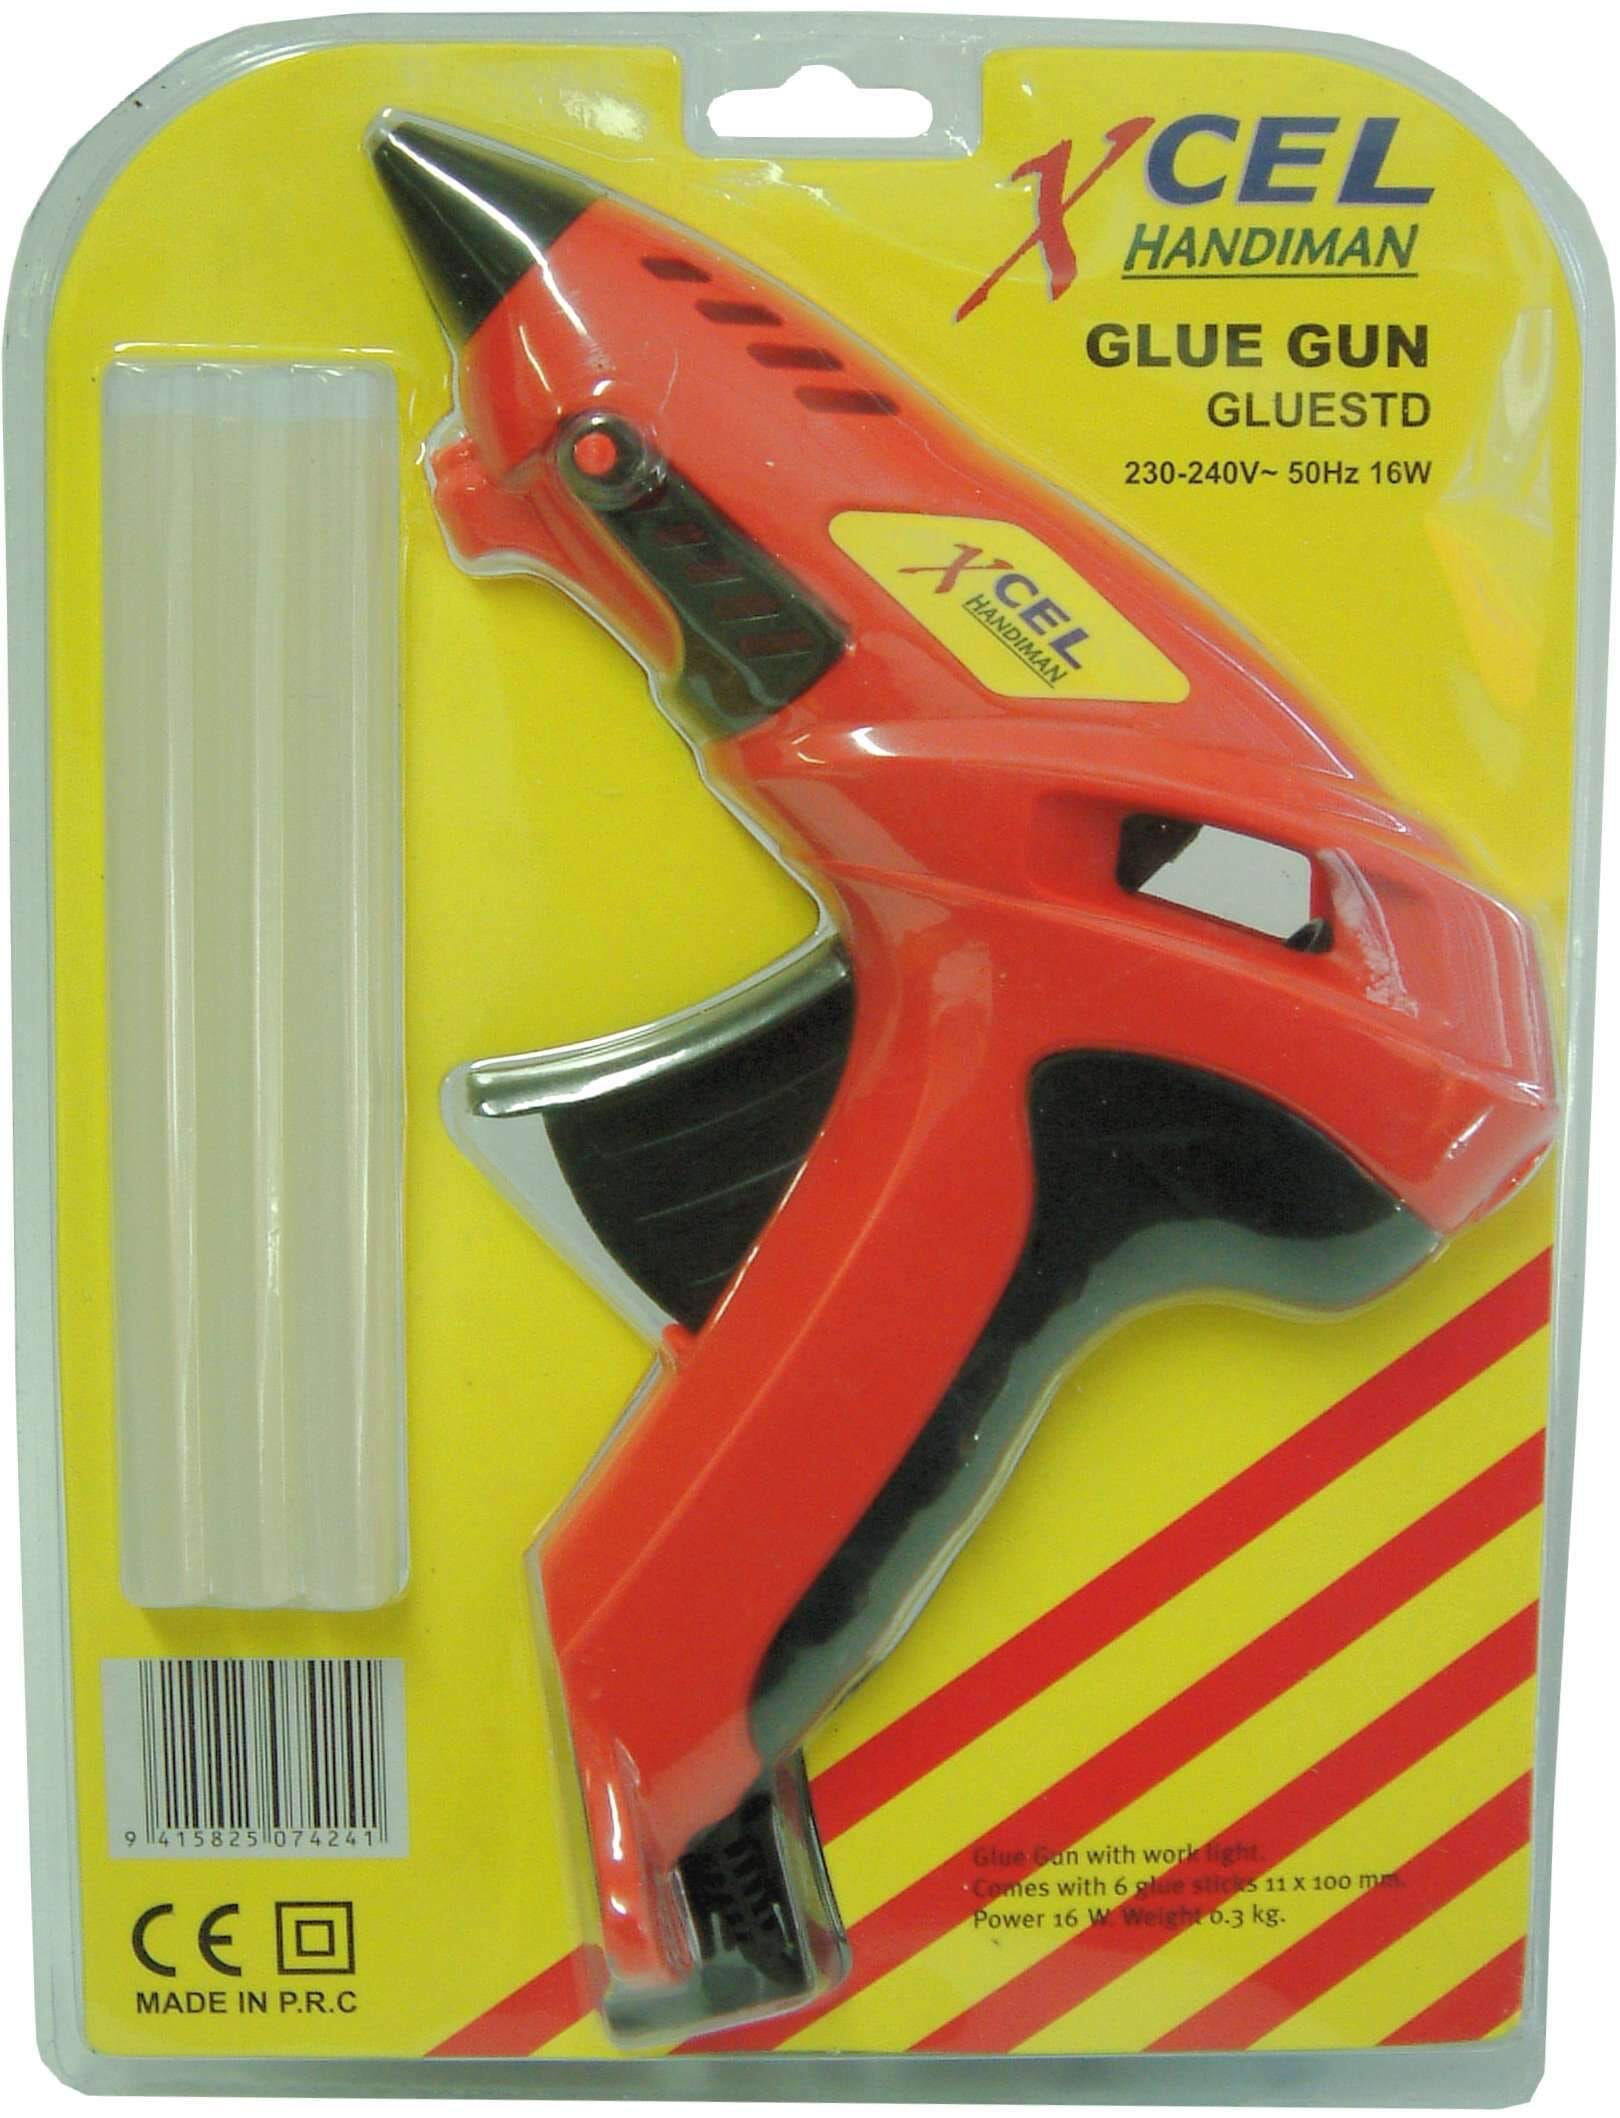 Fuller Electric Glue Gun - Standard #704-0840